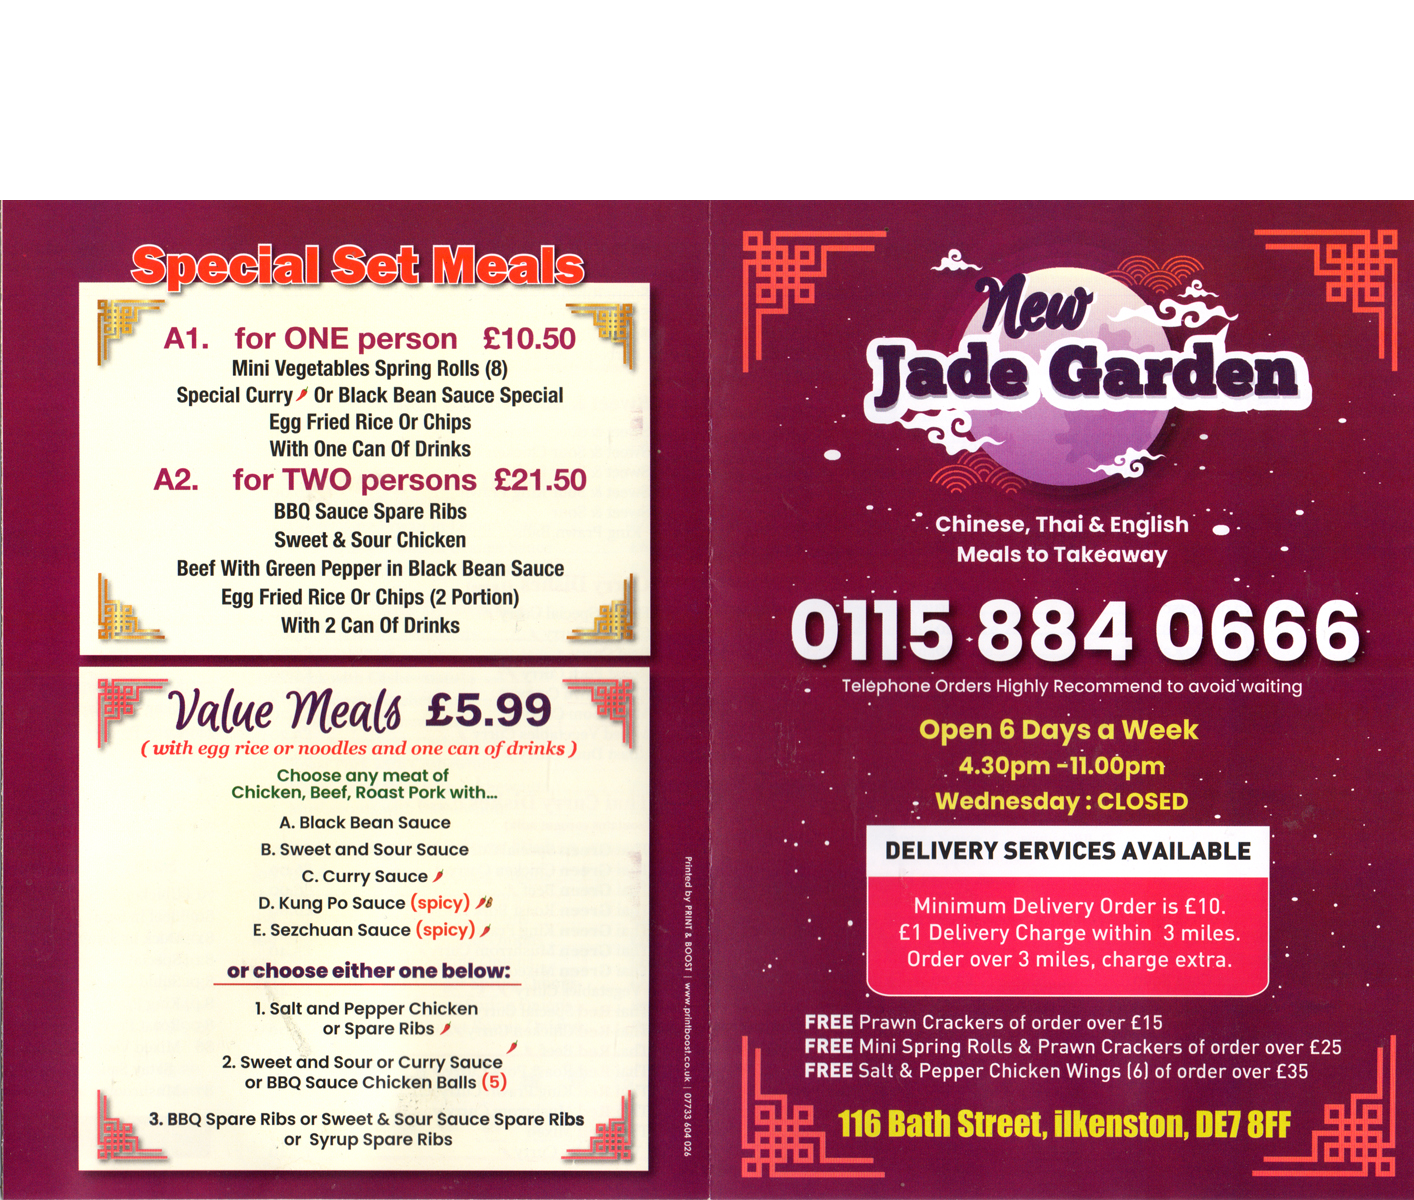 Jades Garden Menu Jade Garden Menu Menu For Jade Garden Edgware London Please Contact The Restaurant Directly - Wickroct